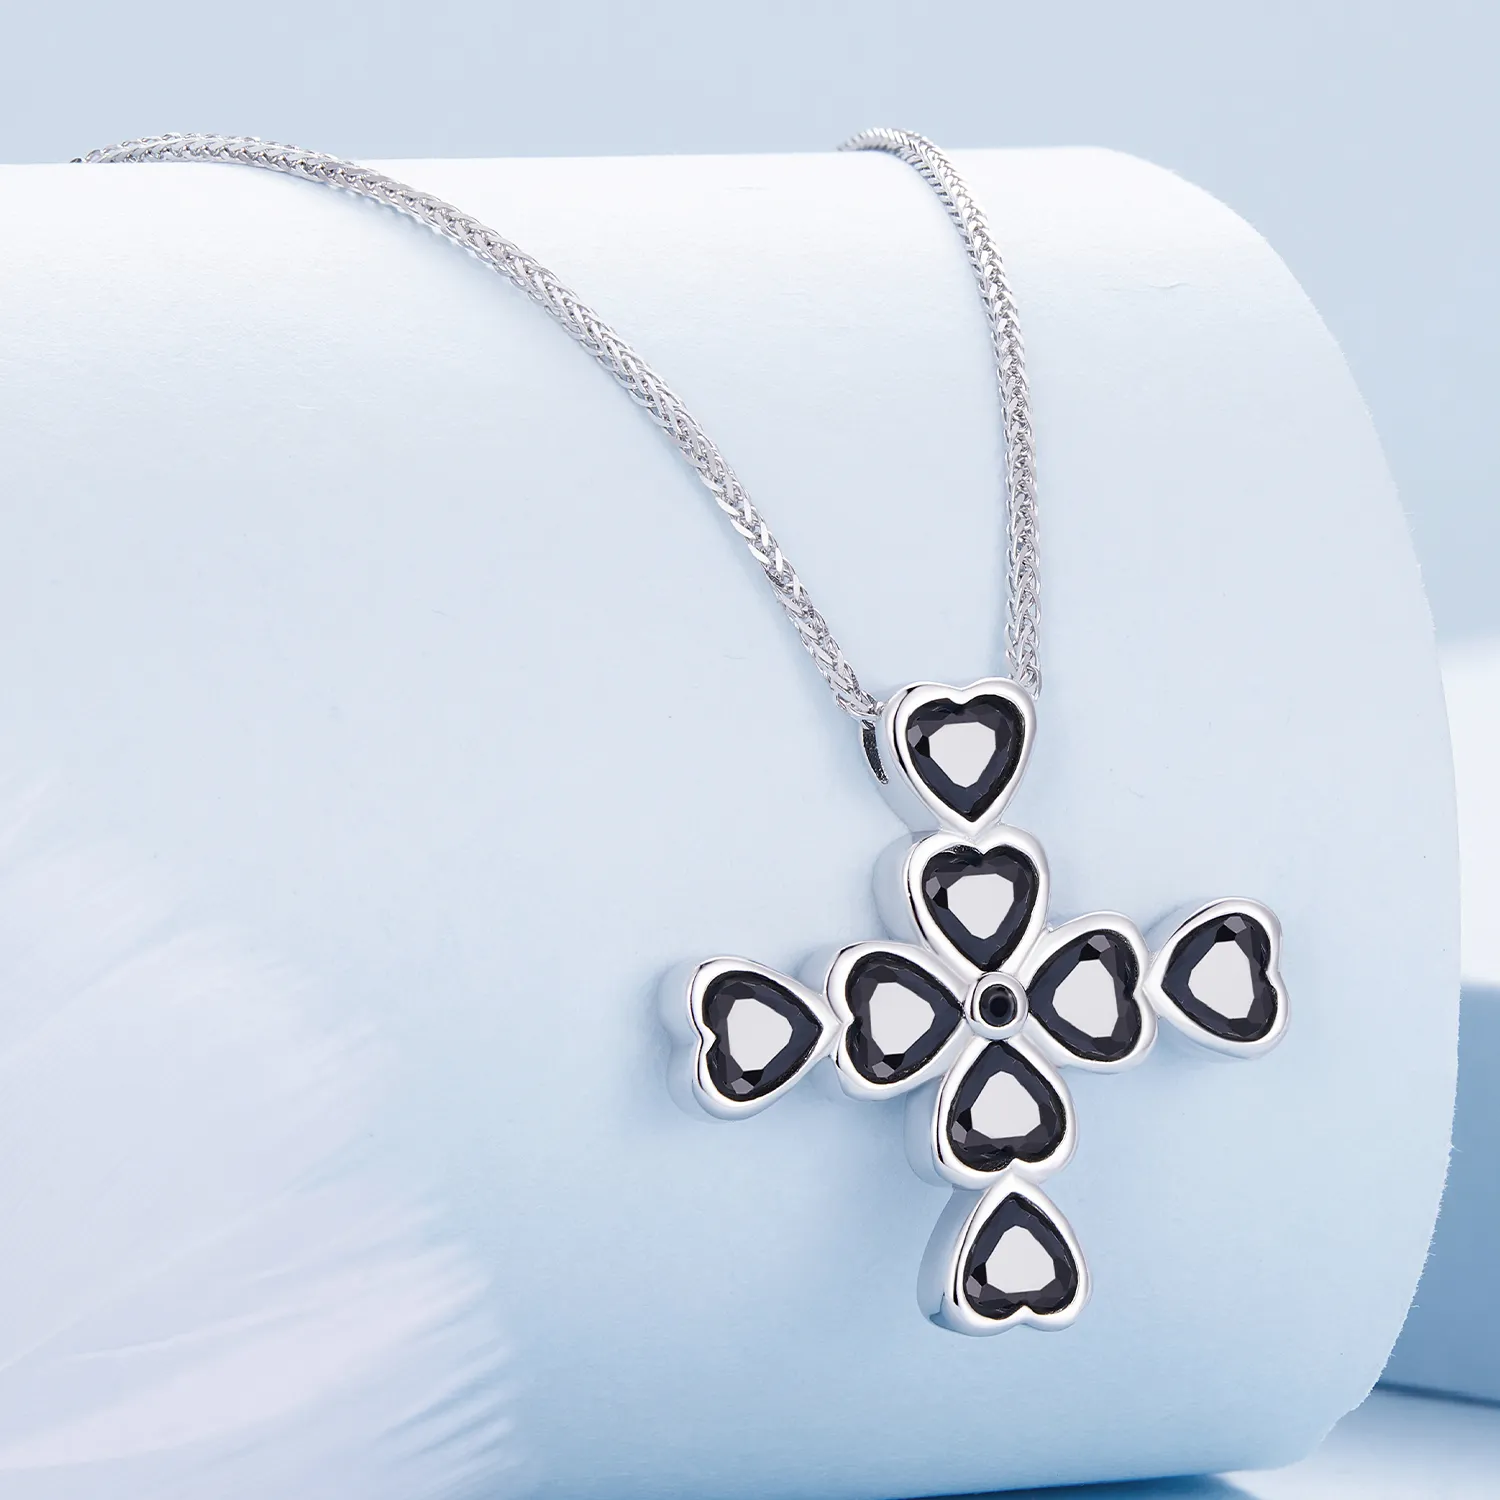 Pandora Style Cross Necklace - BSN335